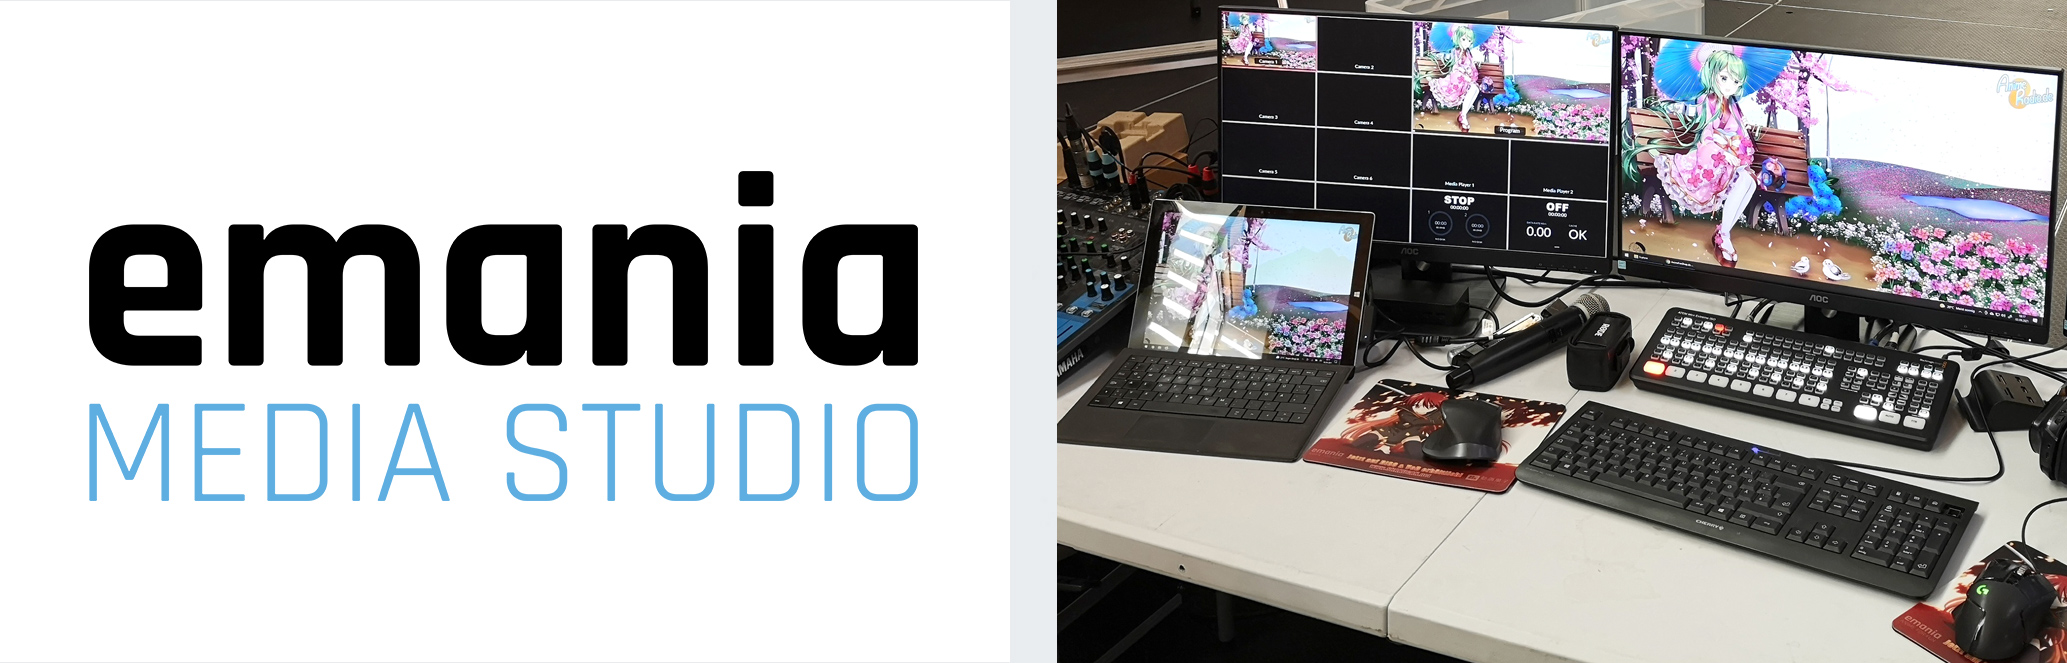 emania Media Studio - Broadcast Yourself